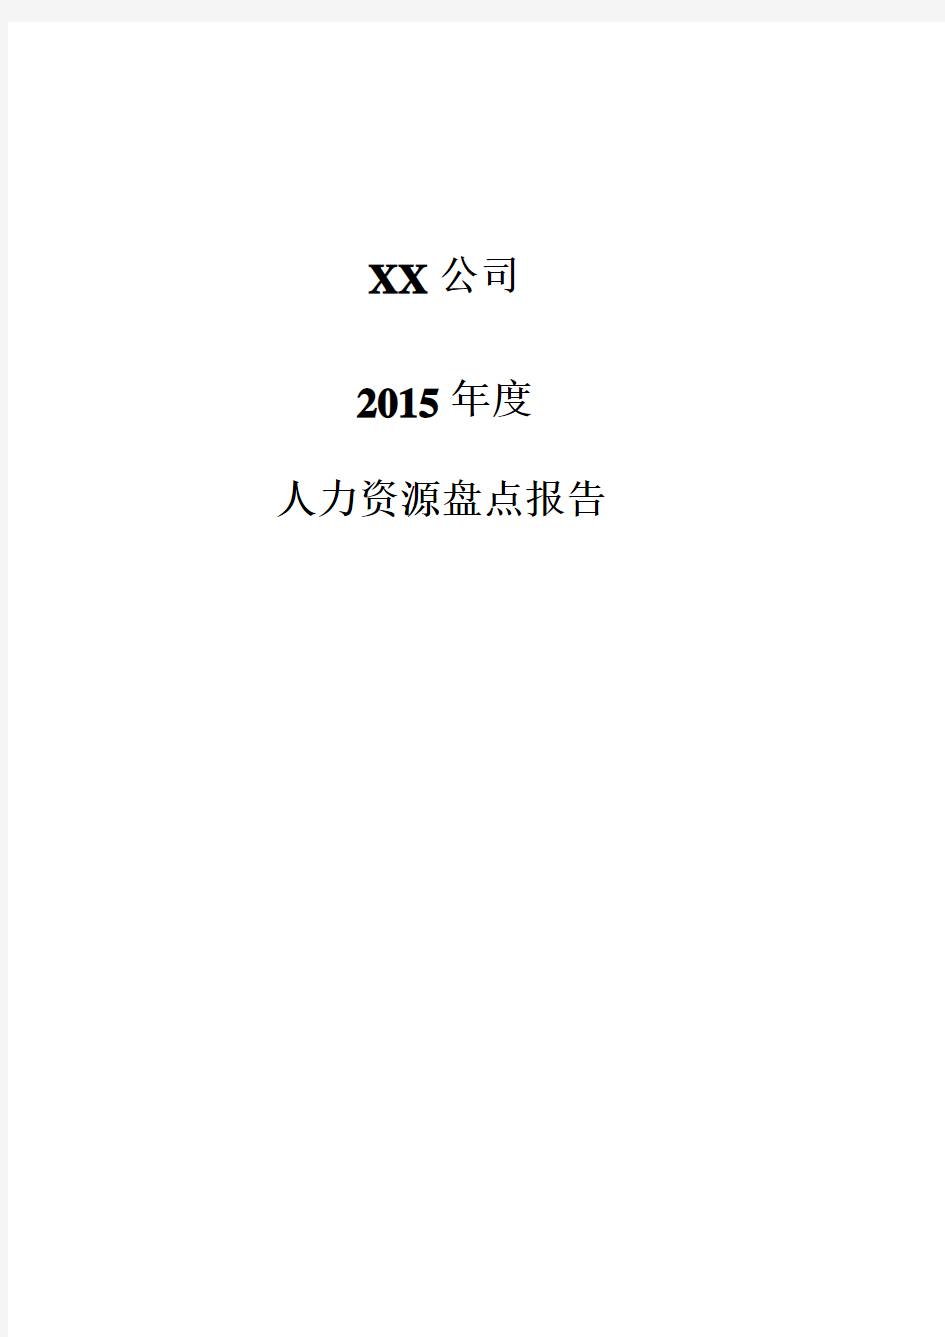 XX公司2015年度人力资源盘点报告